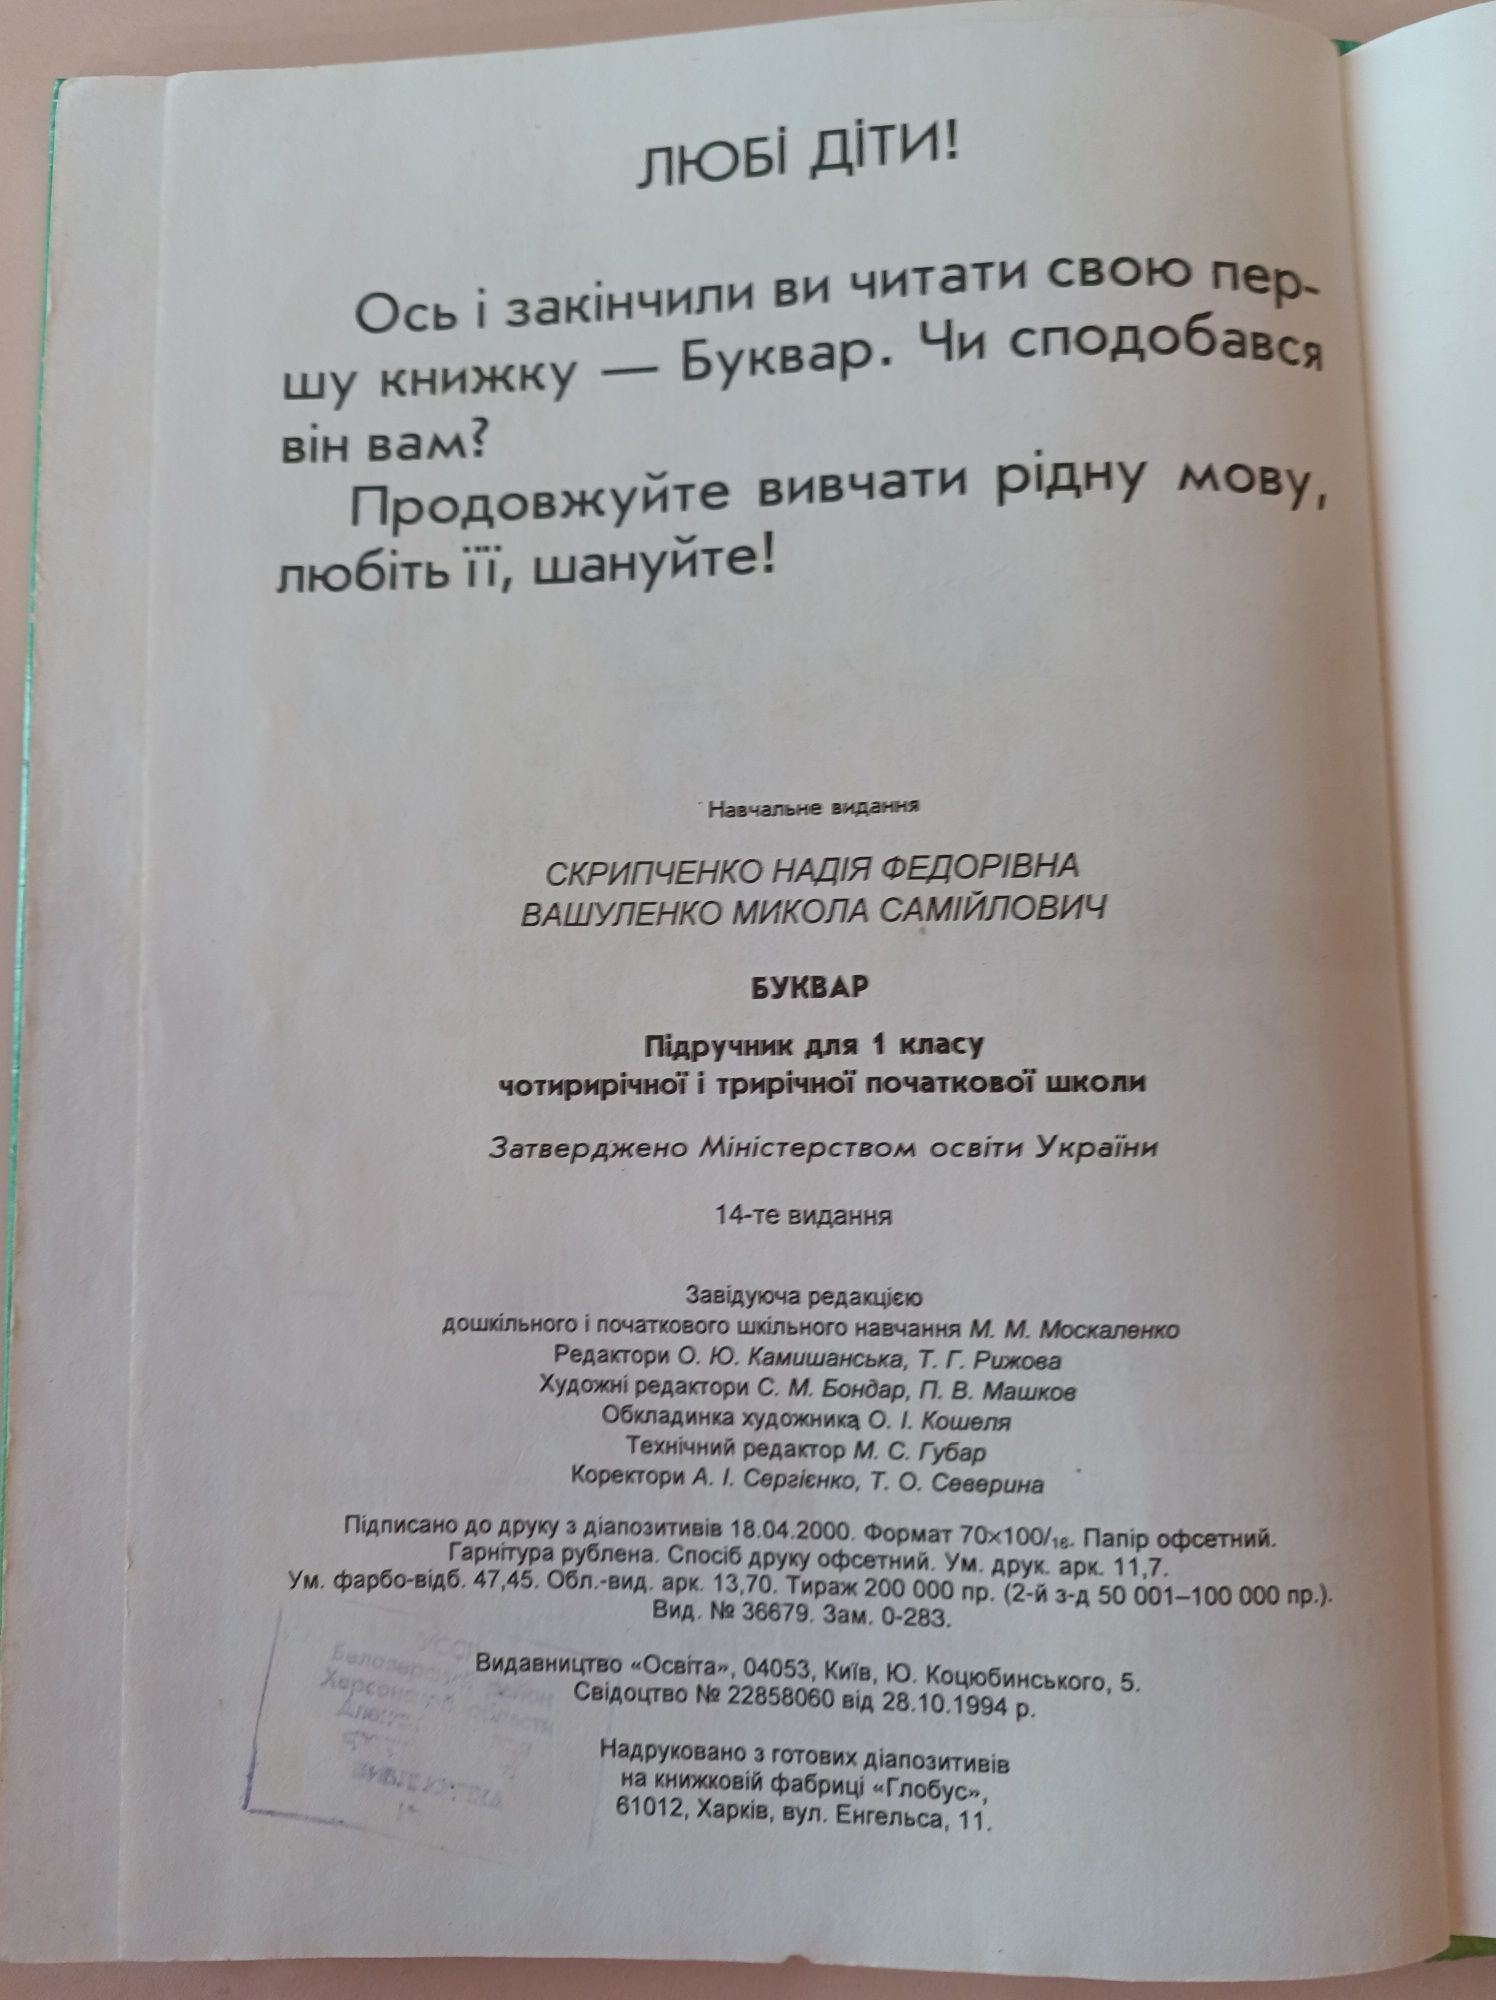 Буквар 2000 р. Н. Ф. Скрипченко 14 видання